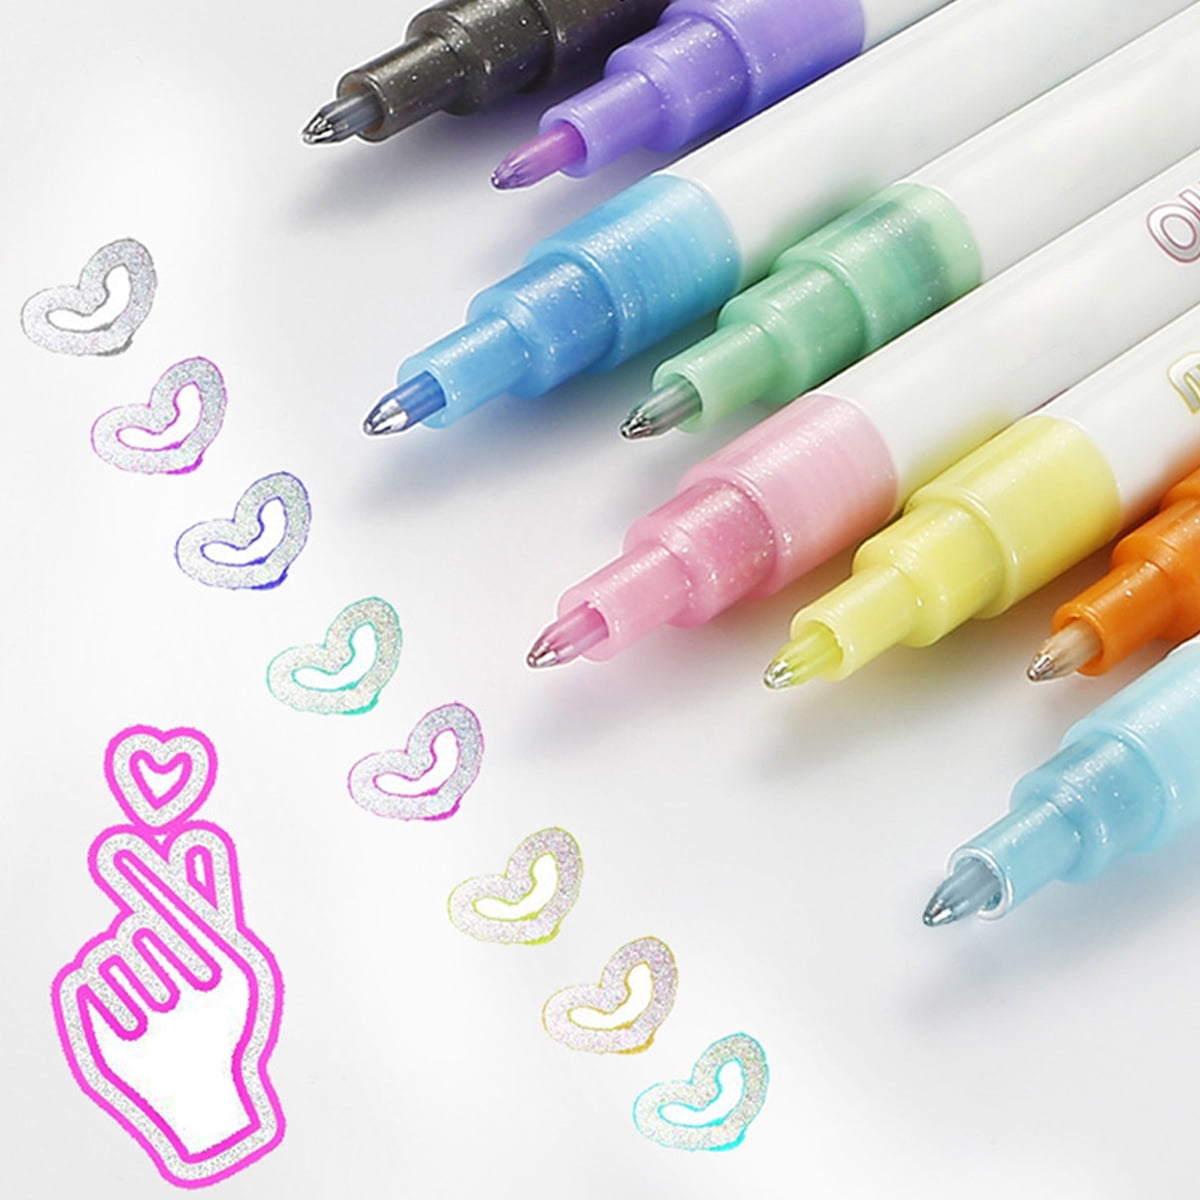 DOUBLE LINE OUTLINE Markers Pens 8/12 Colours Doodle Shimmer Marker Set \ o  u $11.43 - PicClick AU